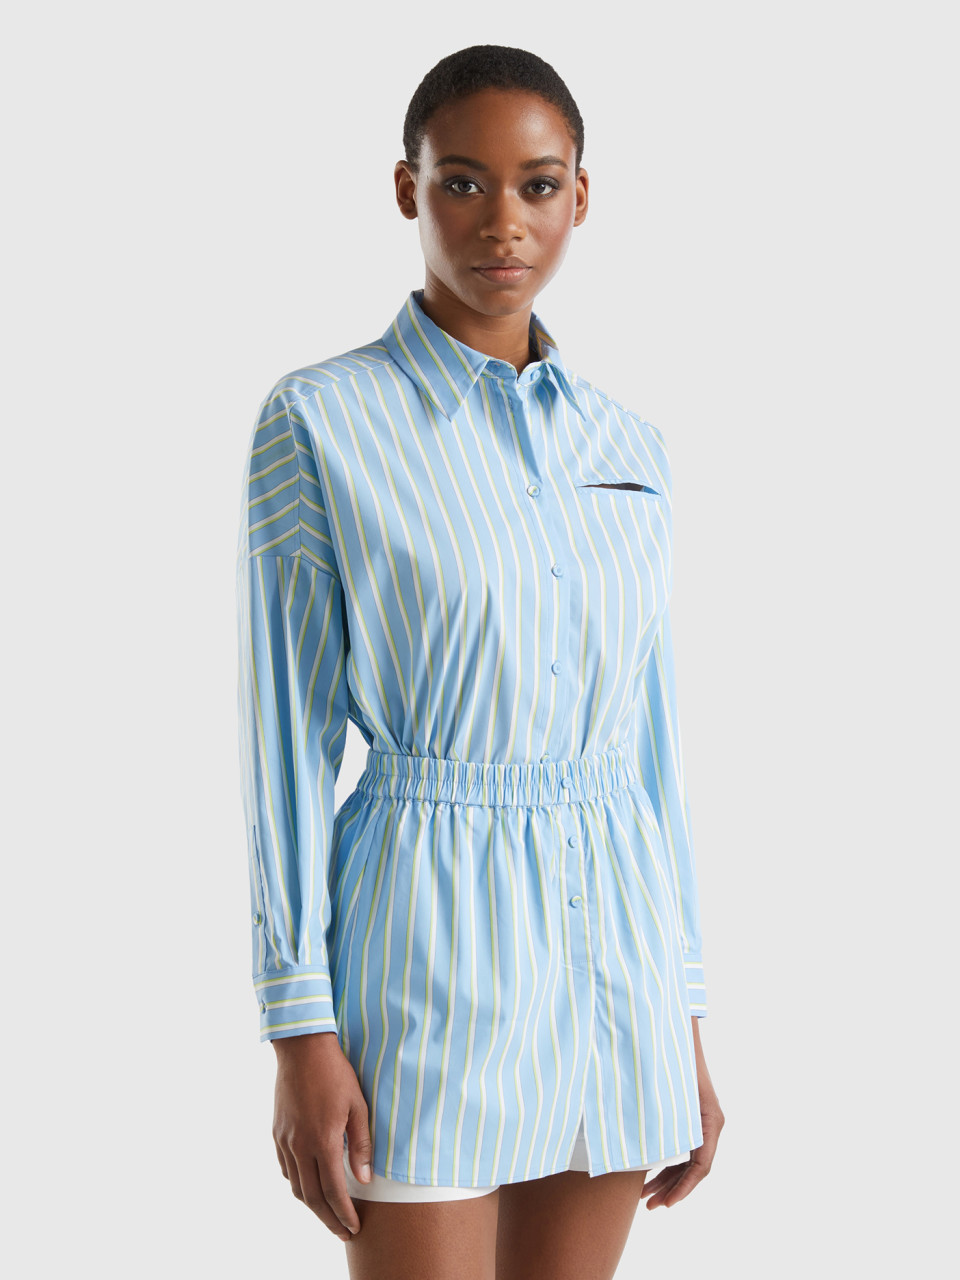 Benetton, Wide Striped Shirt, Sky Blue, Women